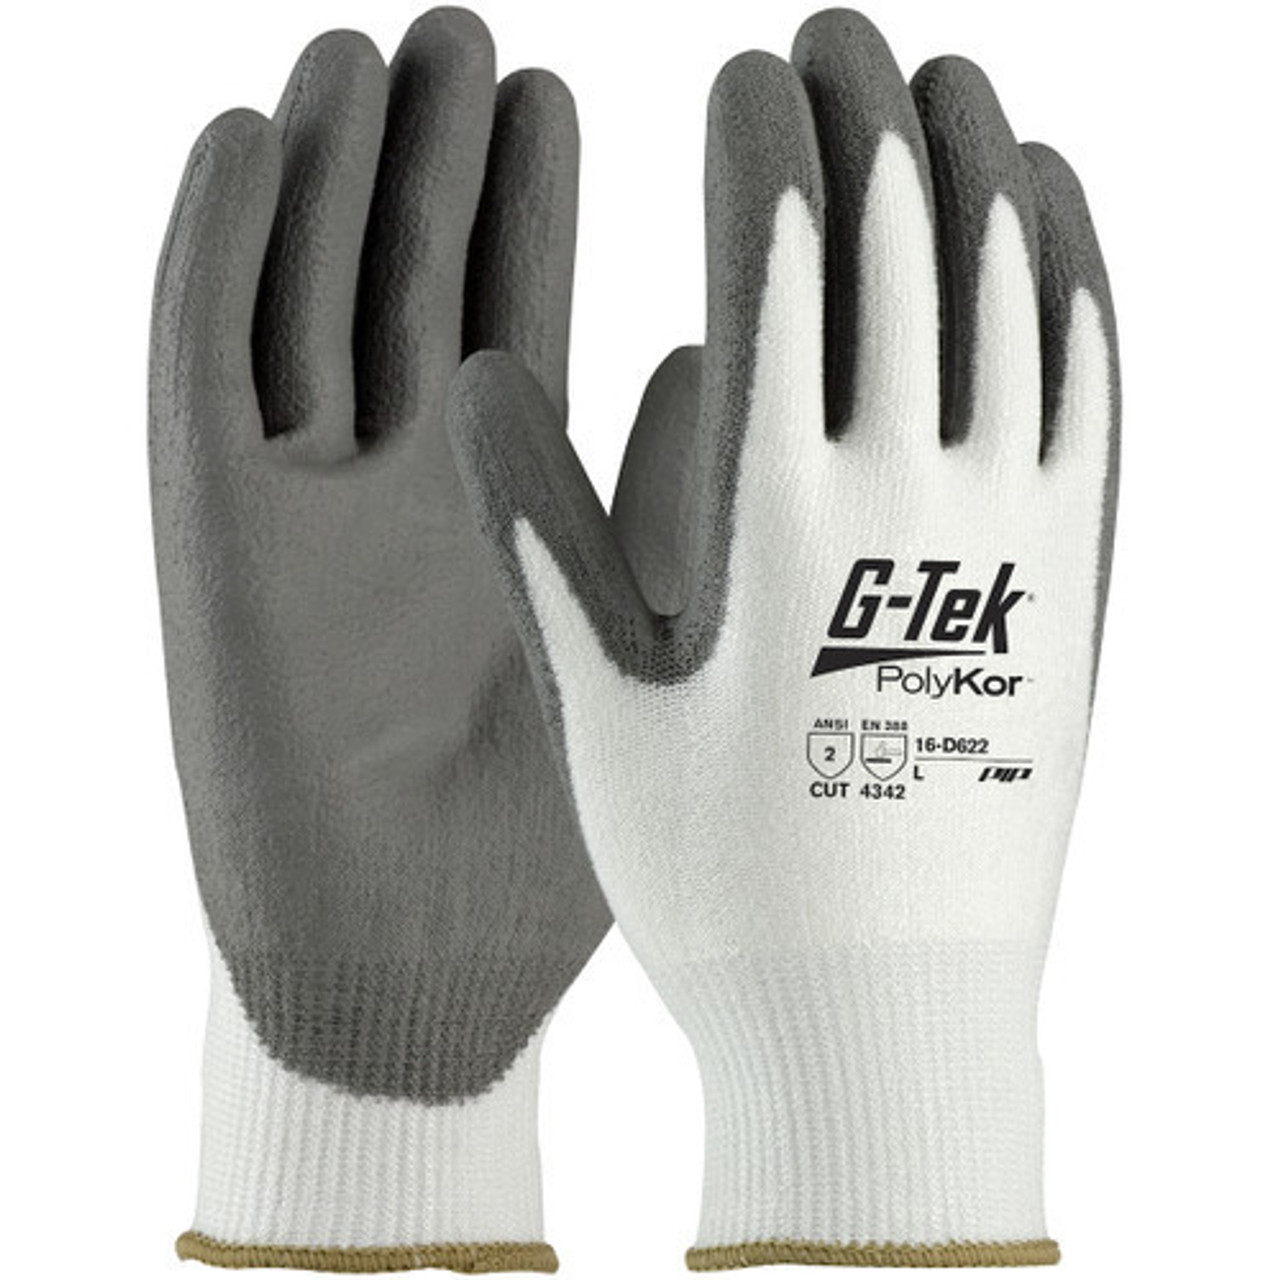 PIP G-Tek PolyKor 16-D622 White/Gray Cut-Resistant Gloves - ANSI A2 Cut Resistance - Polyurethane Palm & Fingers Coating 